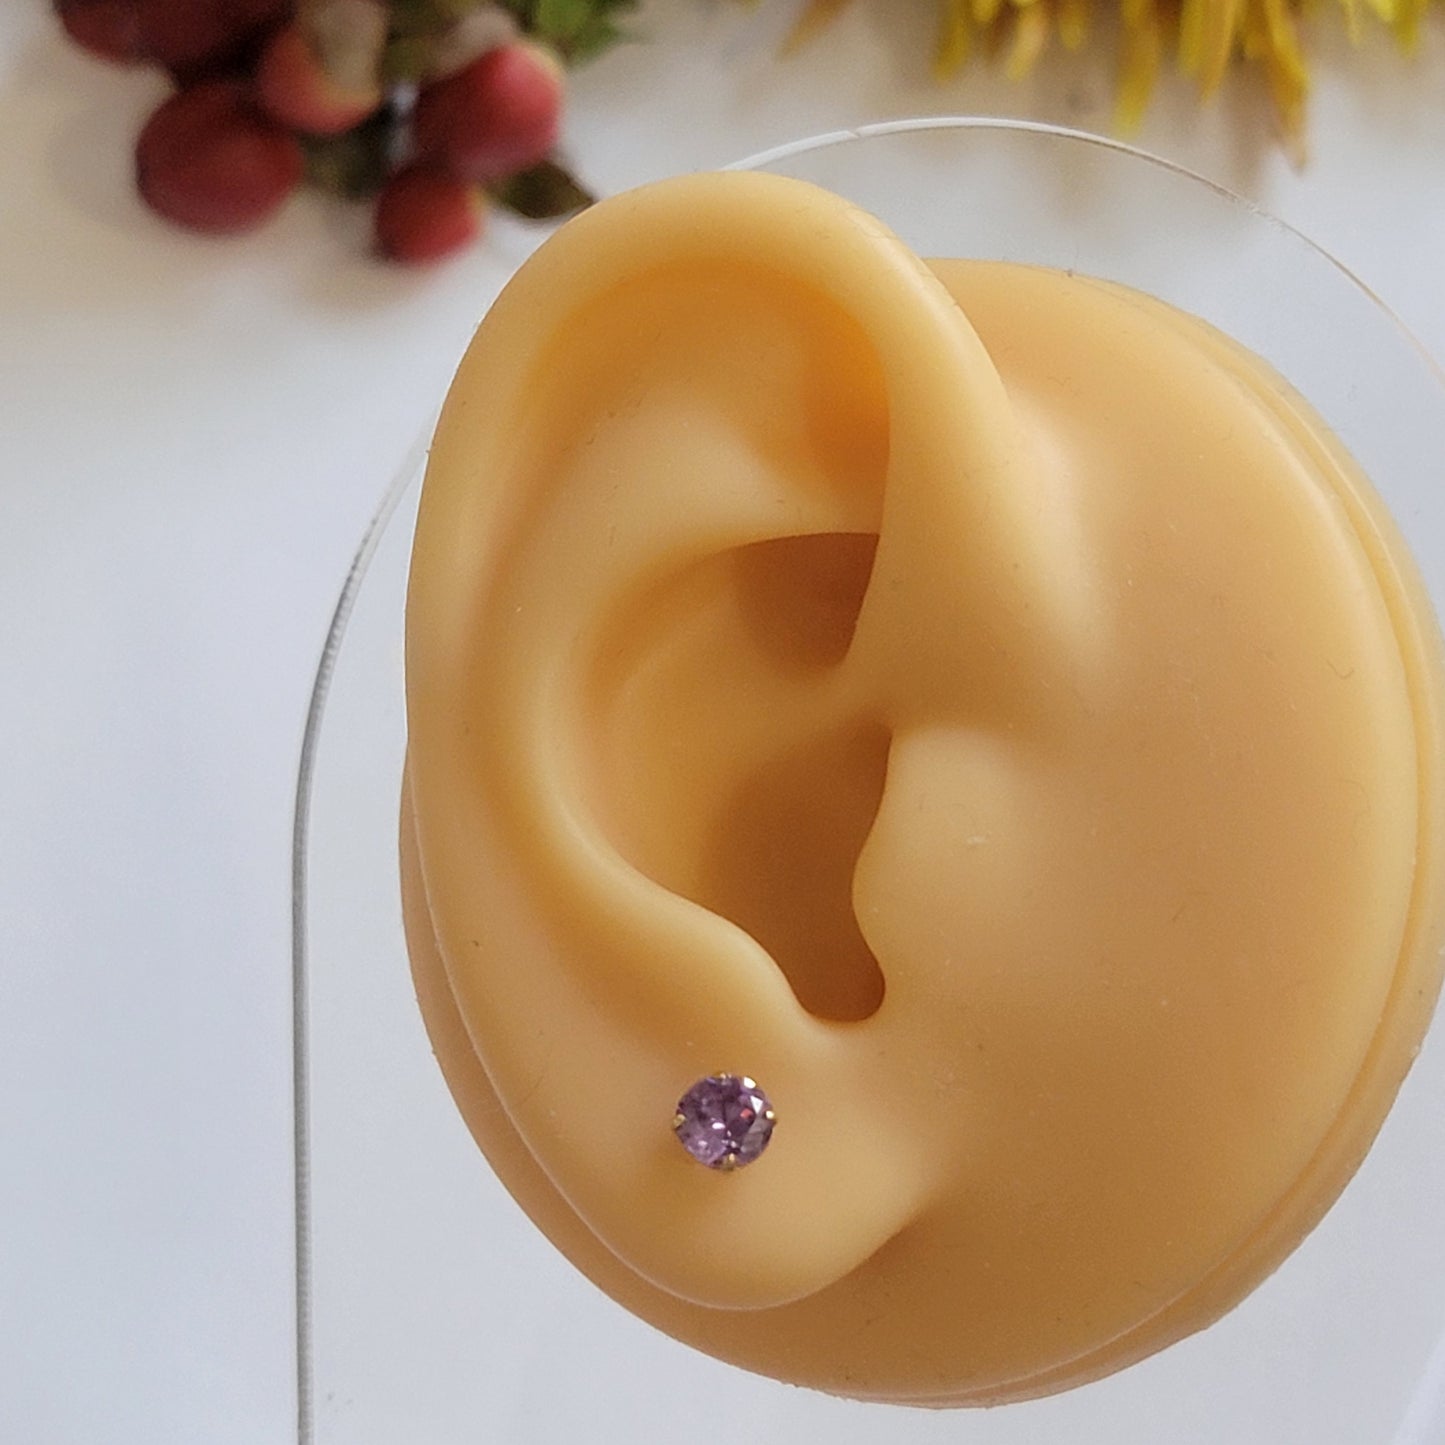 14k Gold Gemstone Stud Earrings